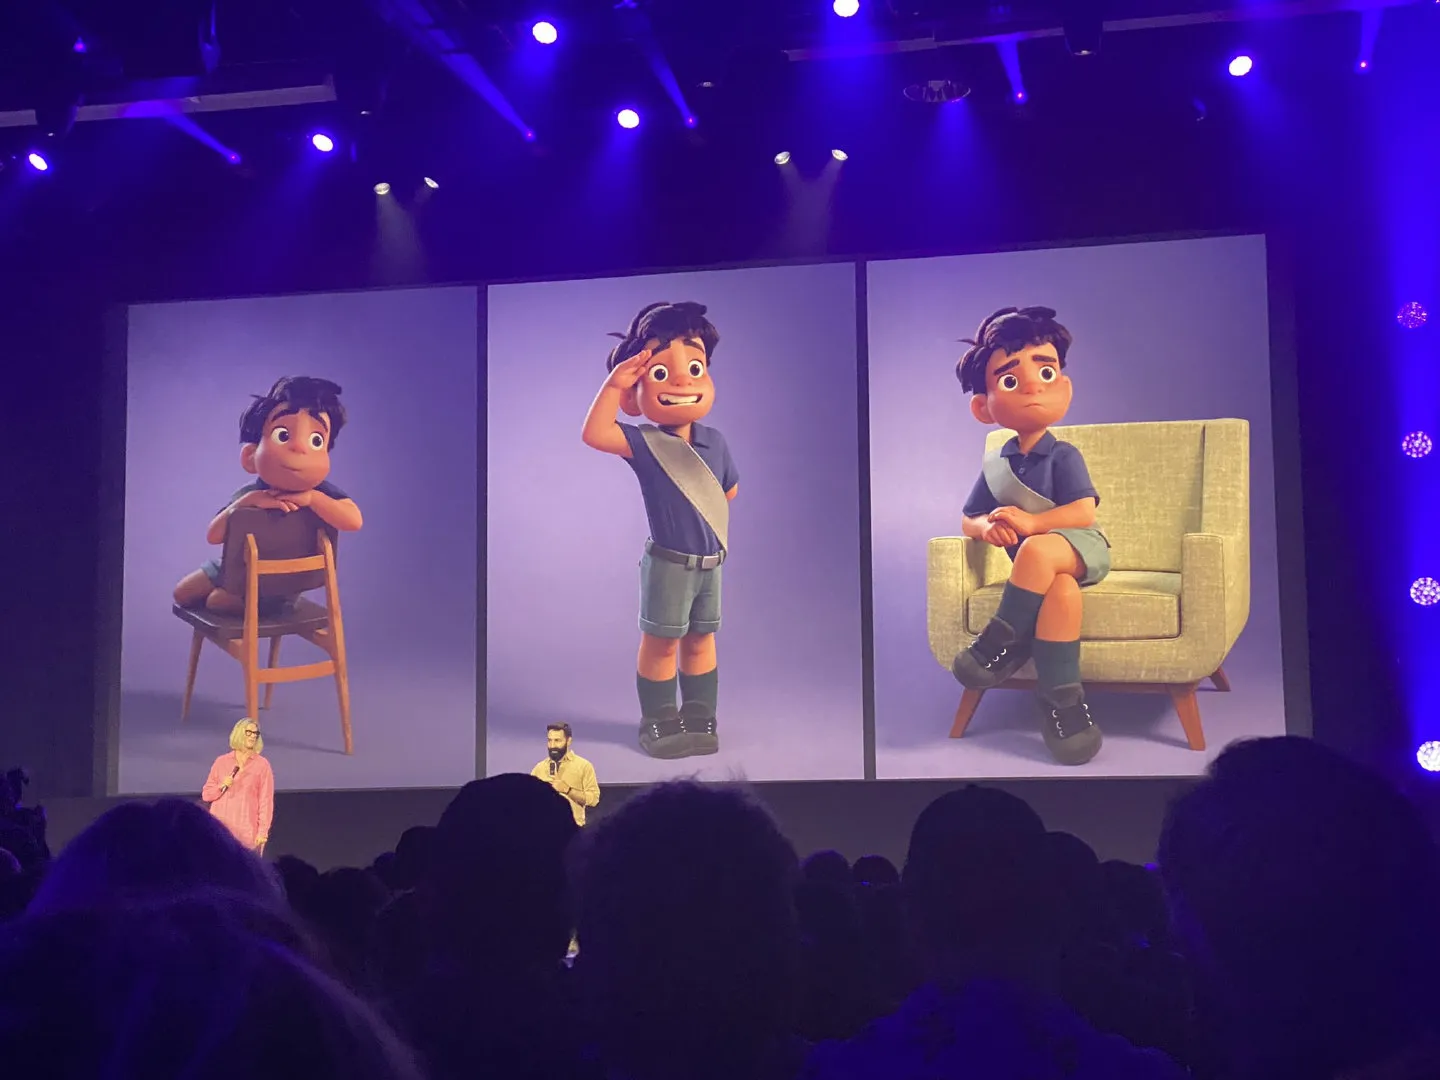 Pixar officially announces new film 'Elio' at D23Expo | FMV6